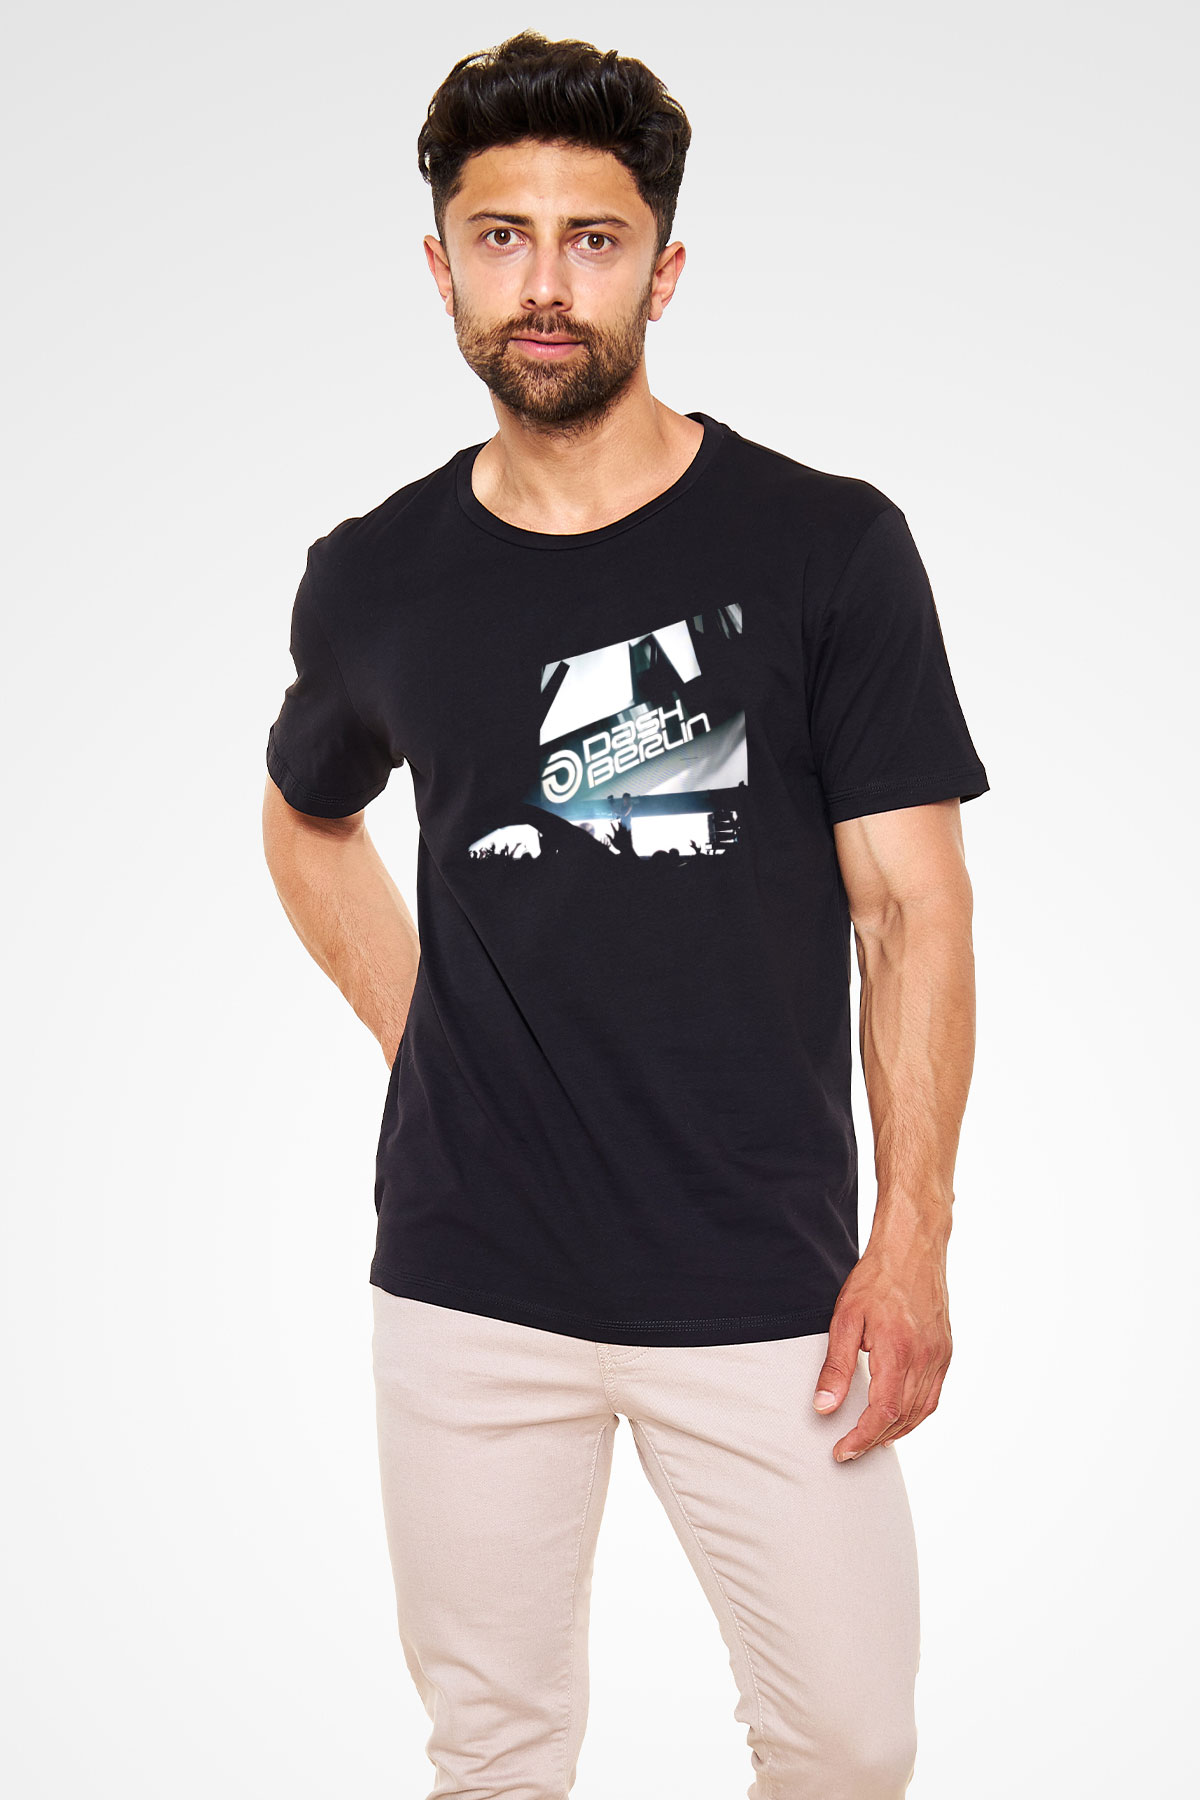 Dash Berlin Black Unisex T-Shirt